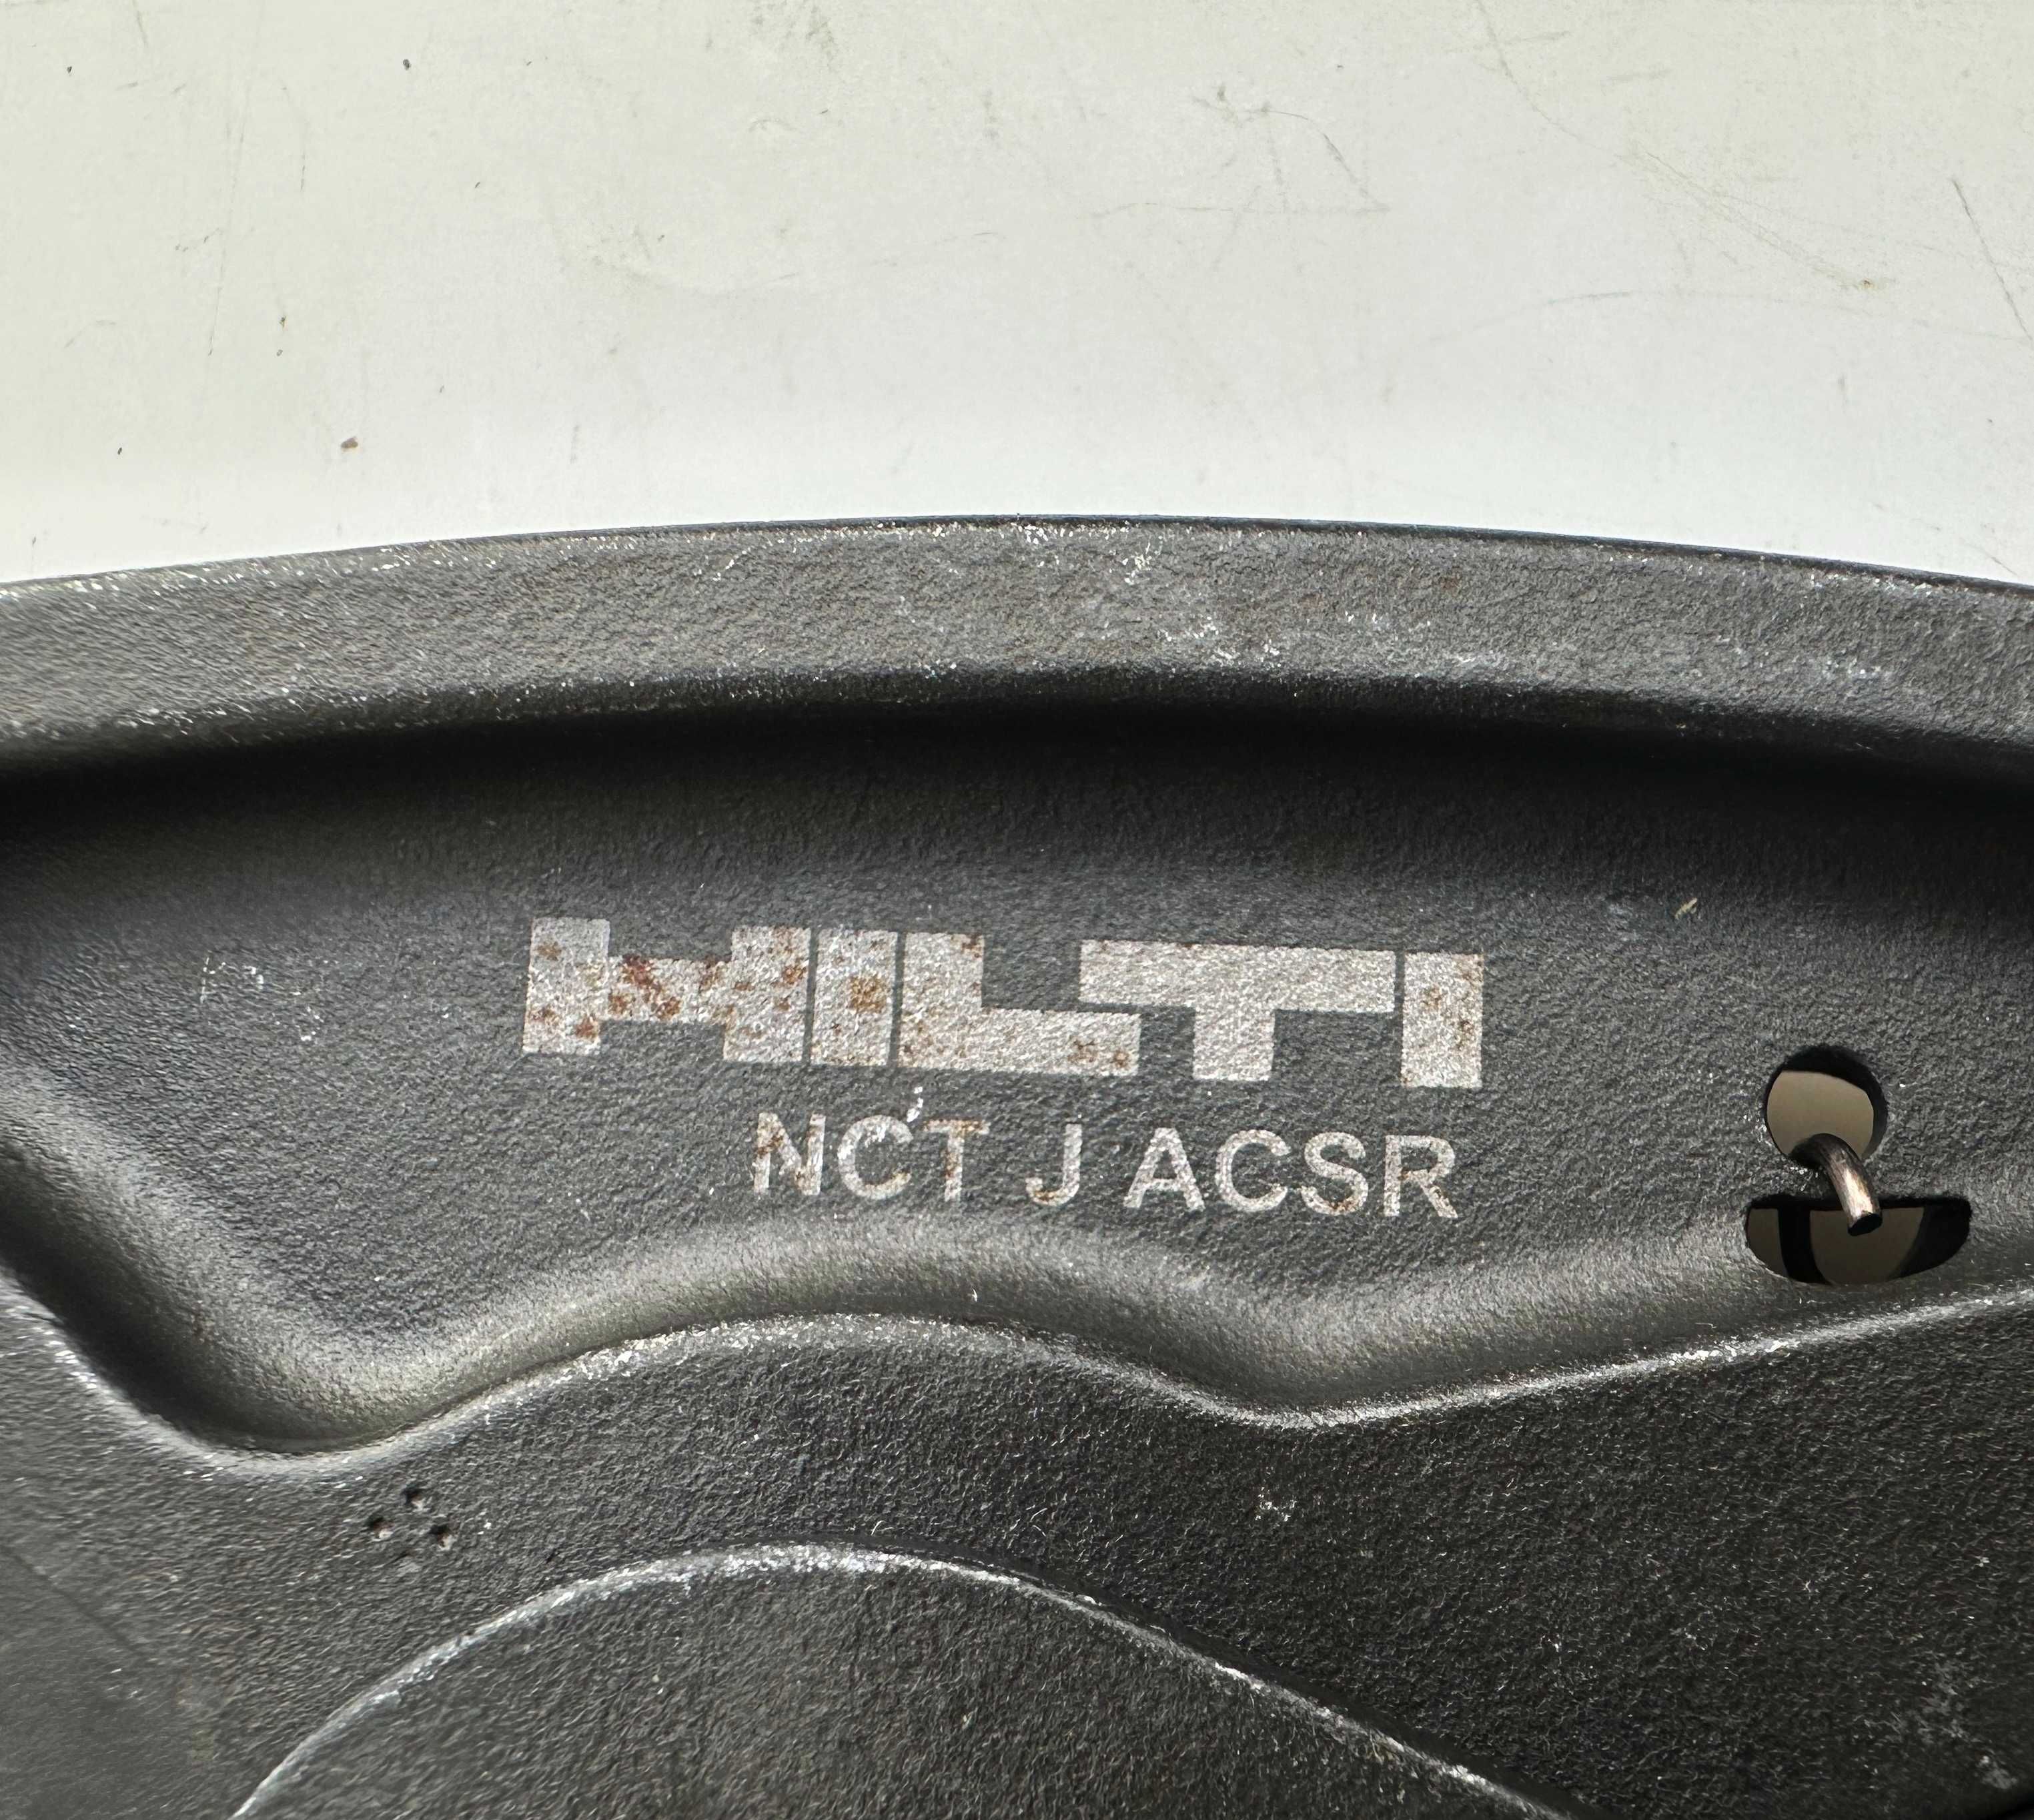 Hilti NCT J ACSR - Режещи челюсти